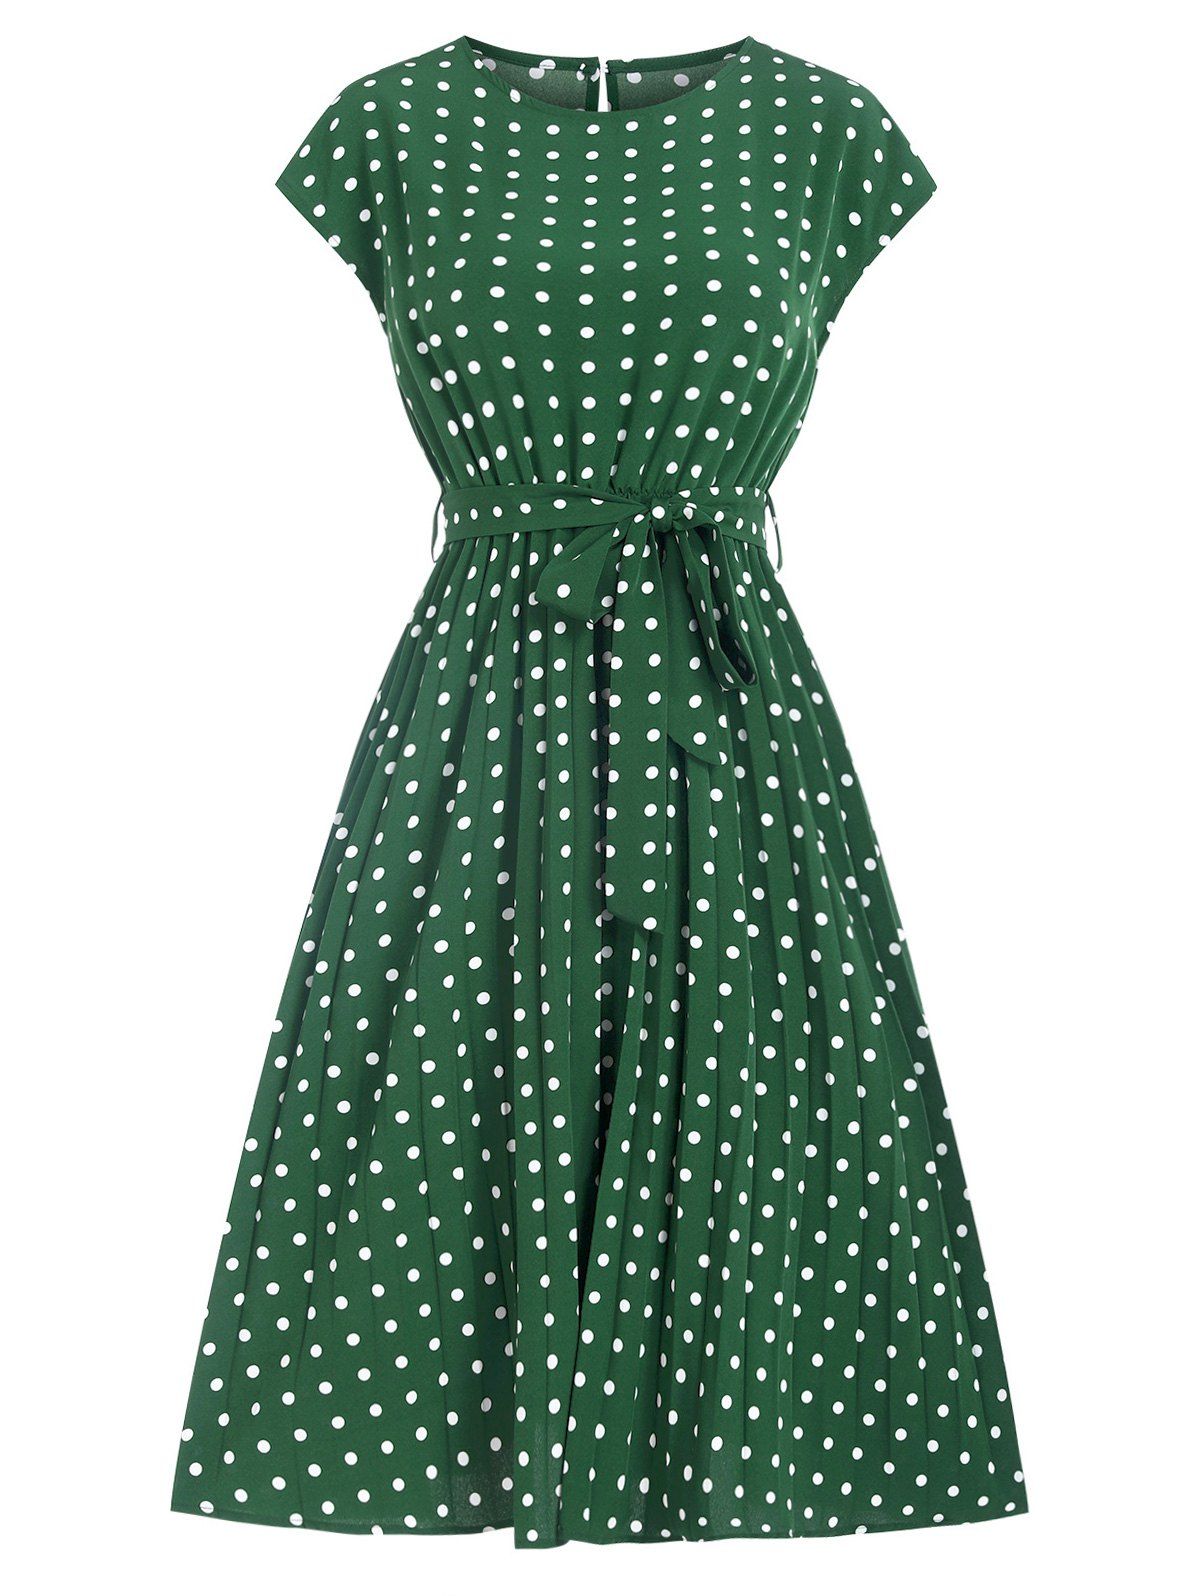 Polka Dot Cap Sleeve Pleated Belted Dress - DEEP GREEN XL